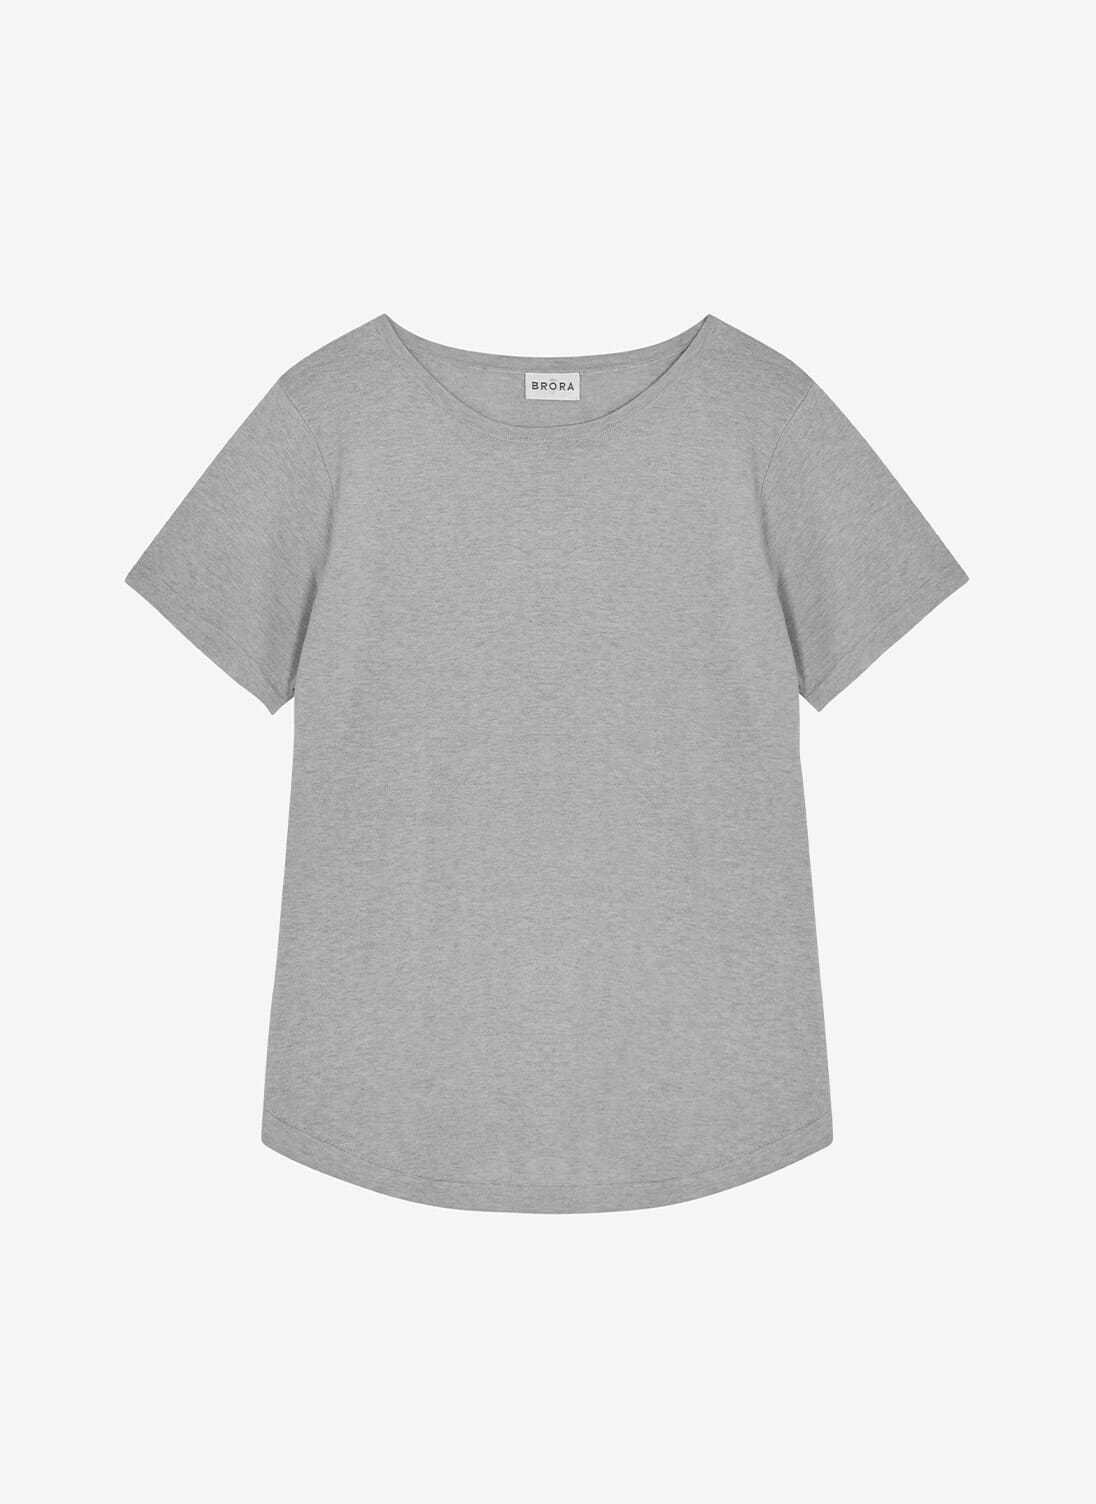 Candy Cotton Knit T-Shirt | Women's T-Shirts | Brora